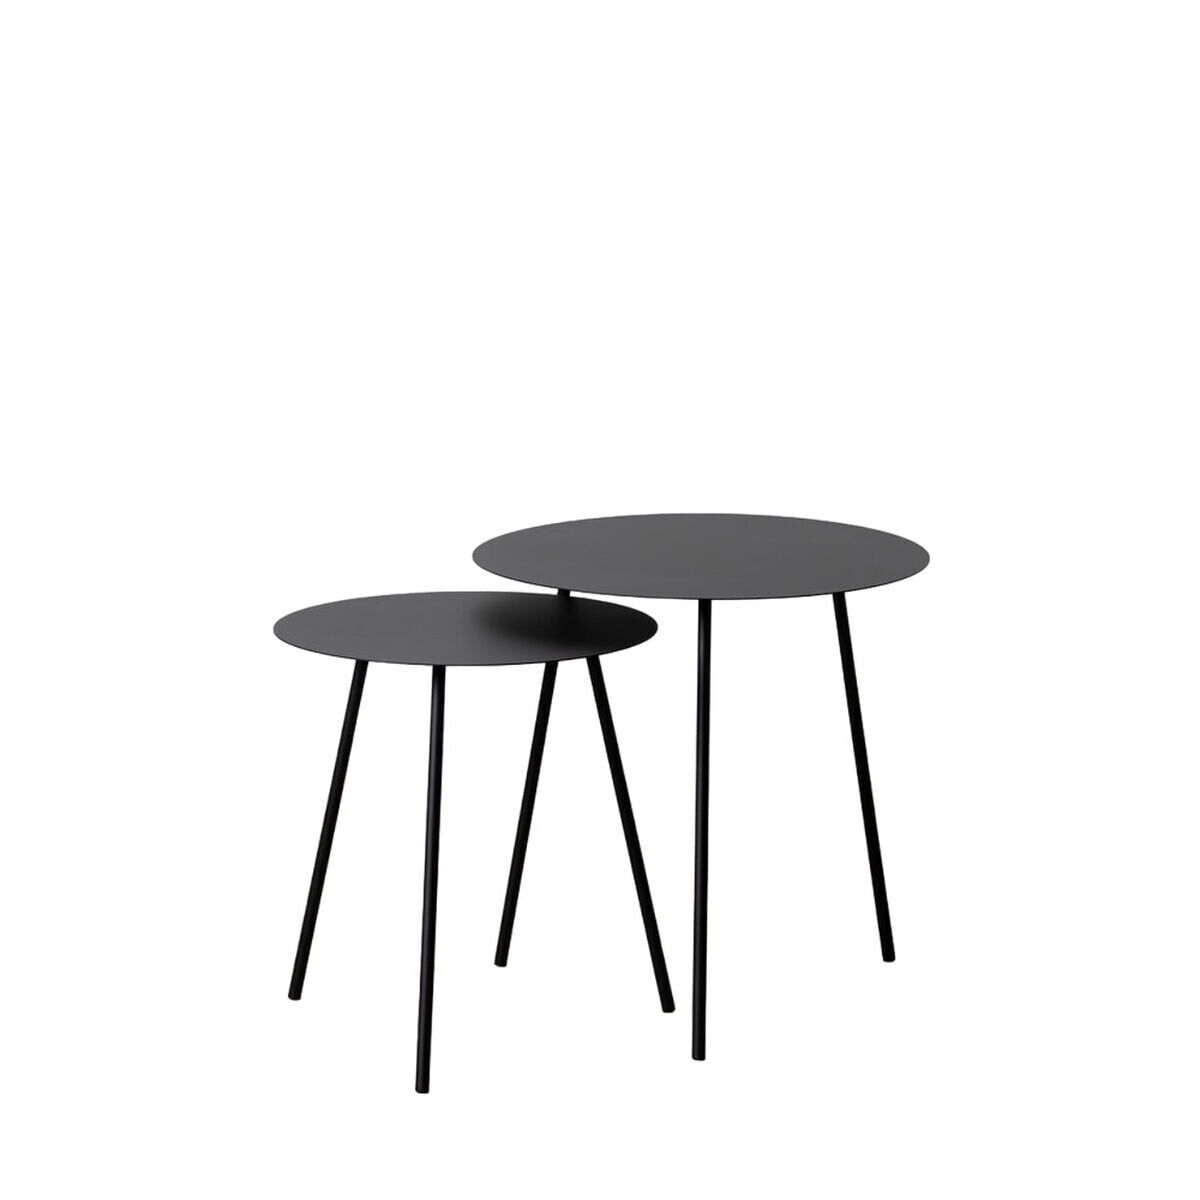 Set of 2 tables Black Iron 55 x 55 x 54 cm (2 Units)